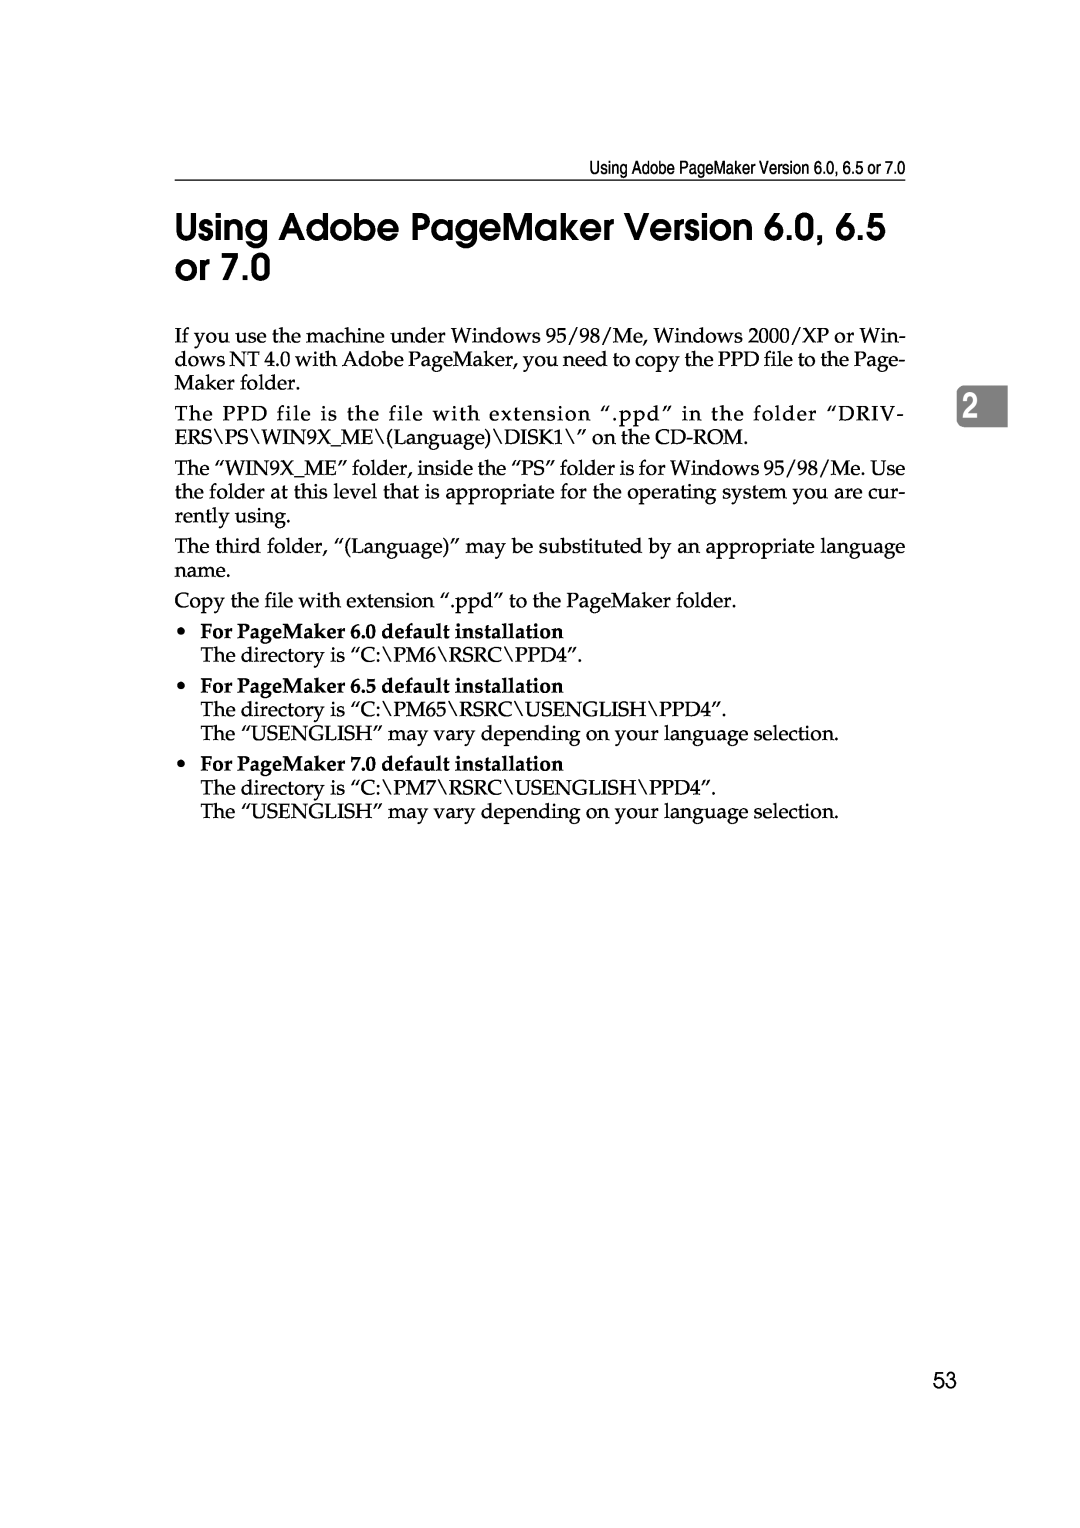 Xerox 1075 manual Using Adobe PageMaker Version 6.0, 6.5 or, For PageMaker 6.5 default installation 